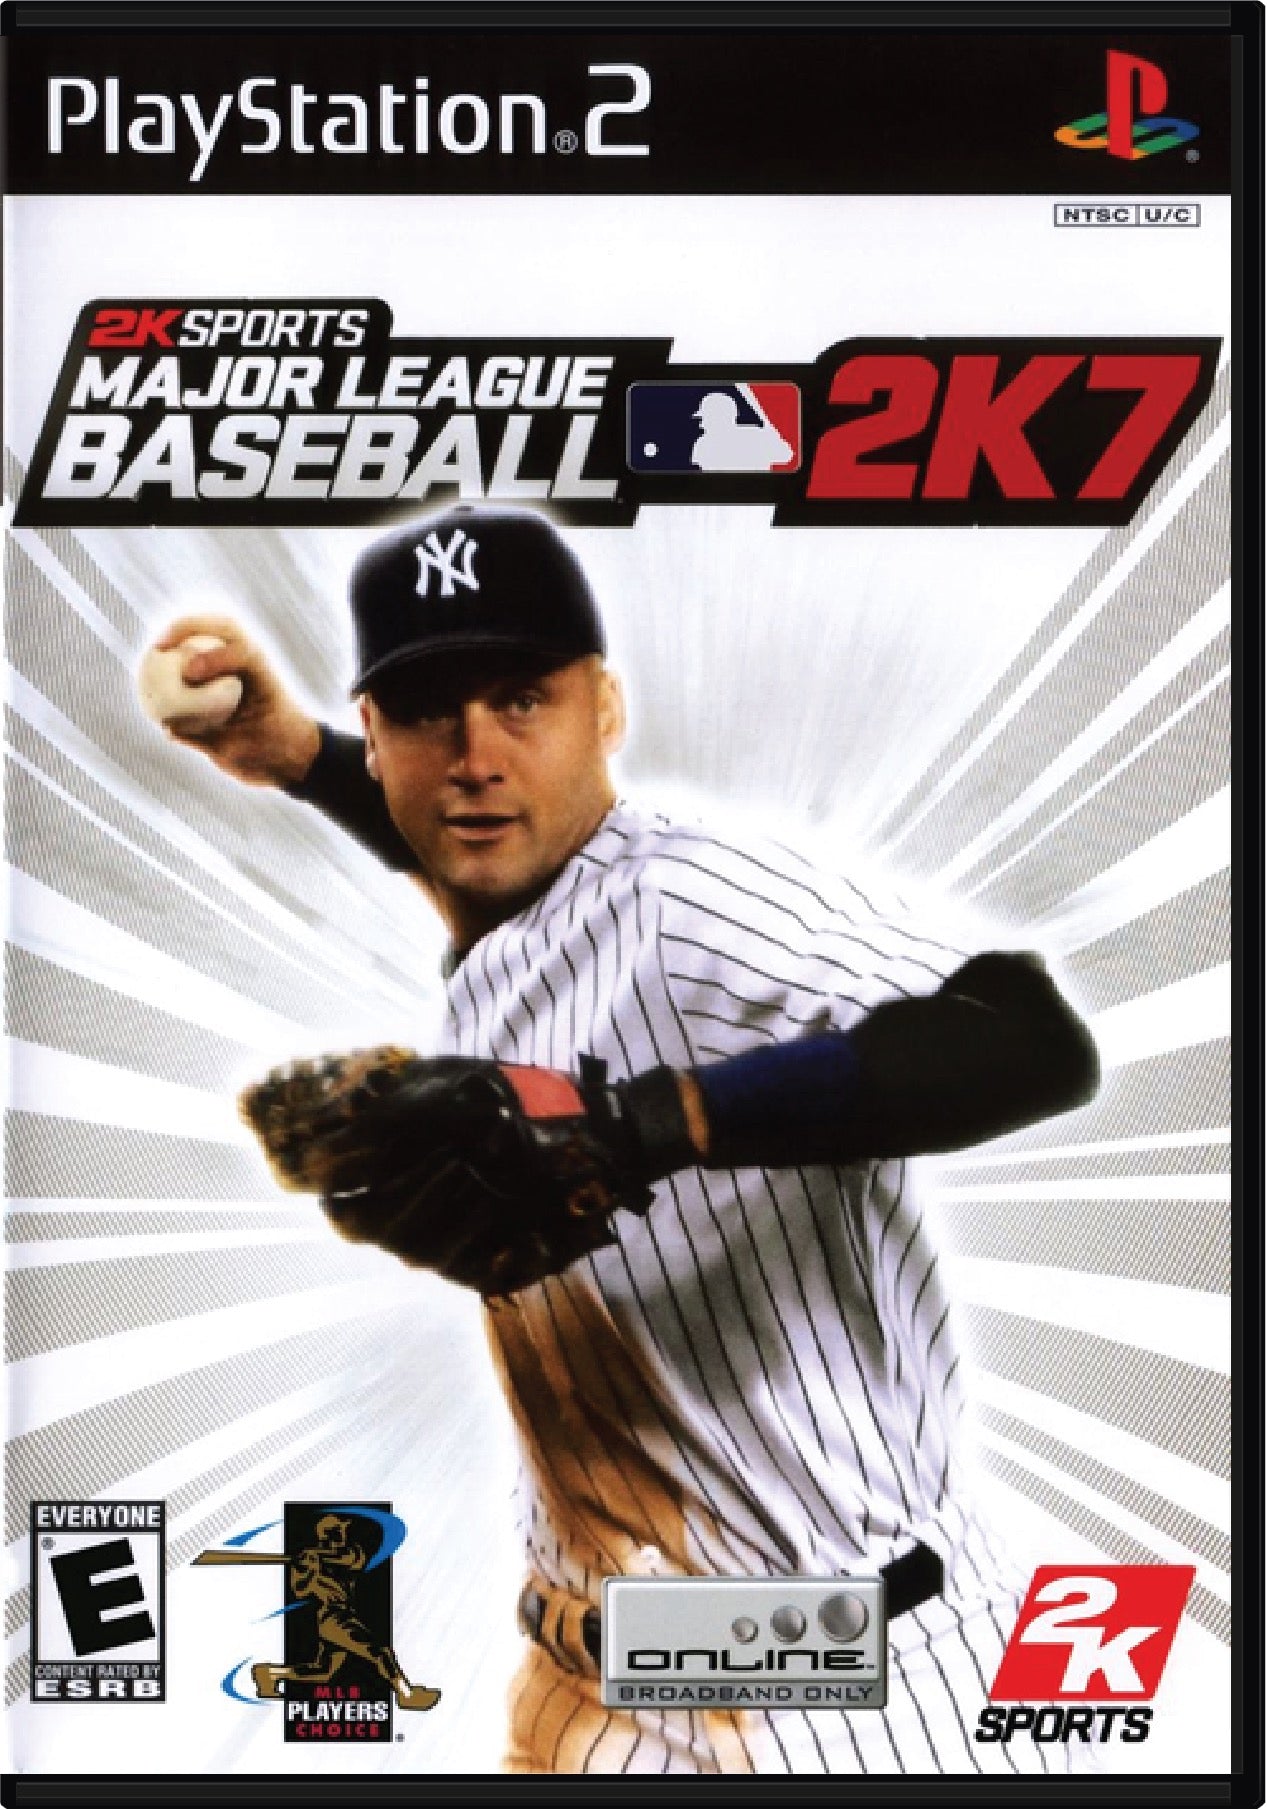 Major League Baseball 2K7 Cover Art and Product Photo